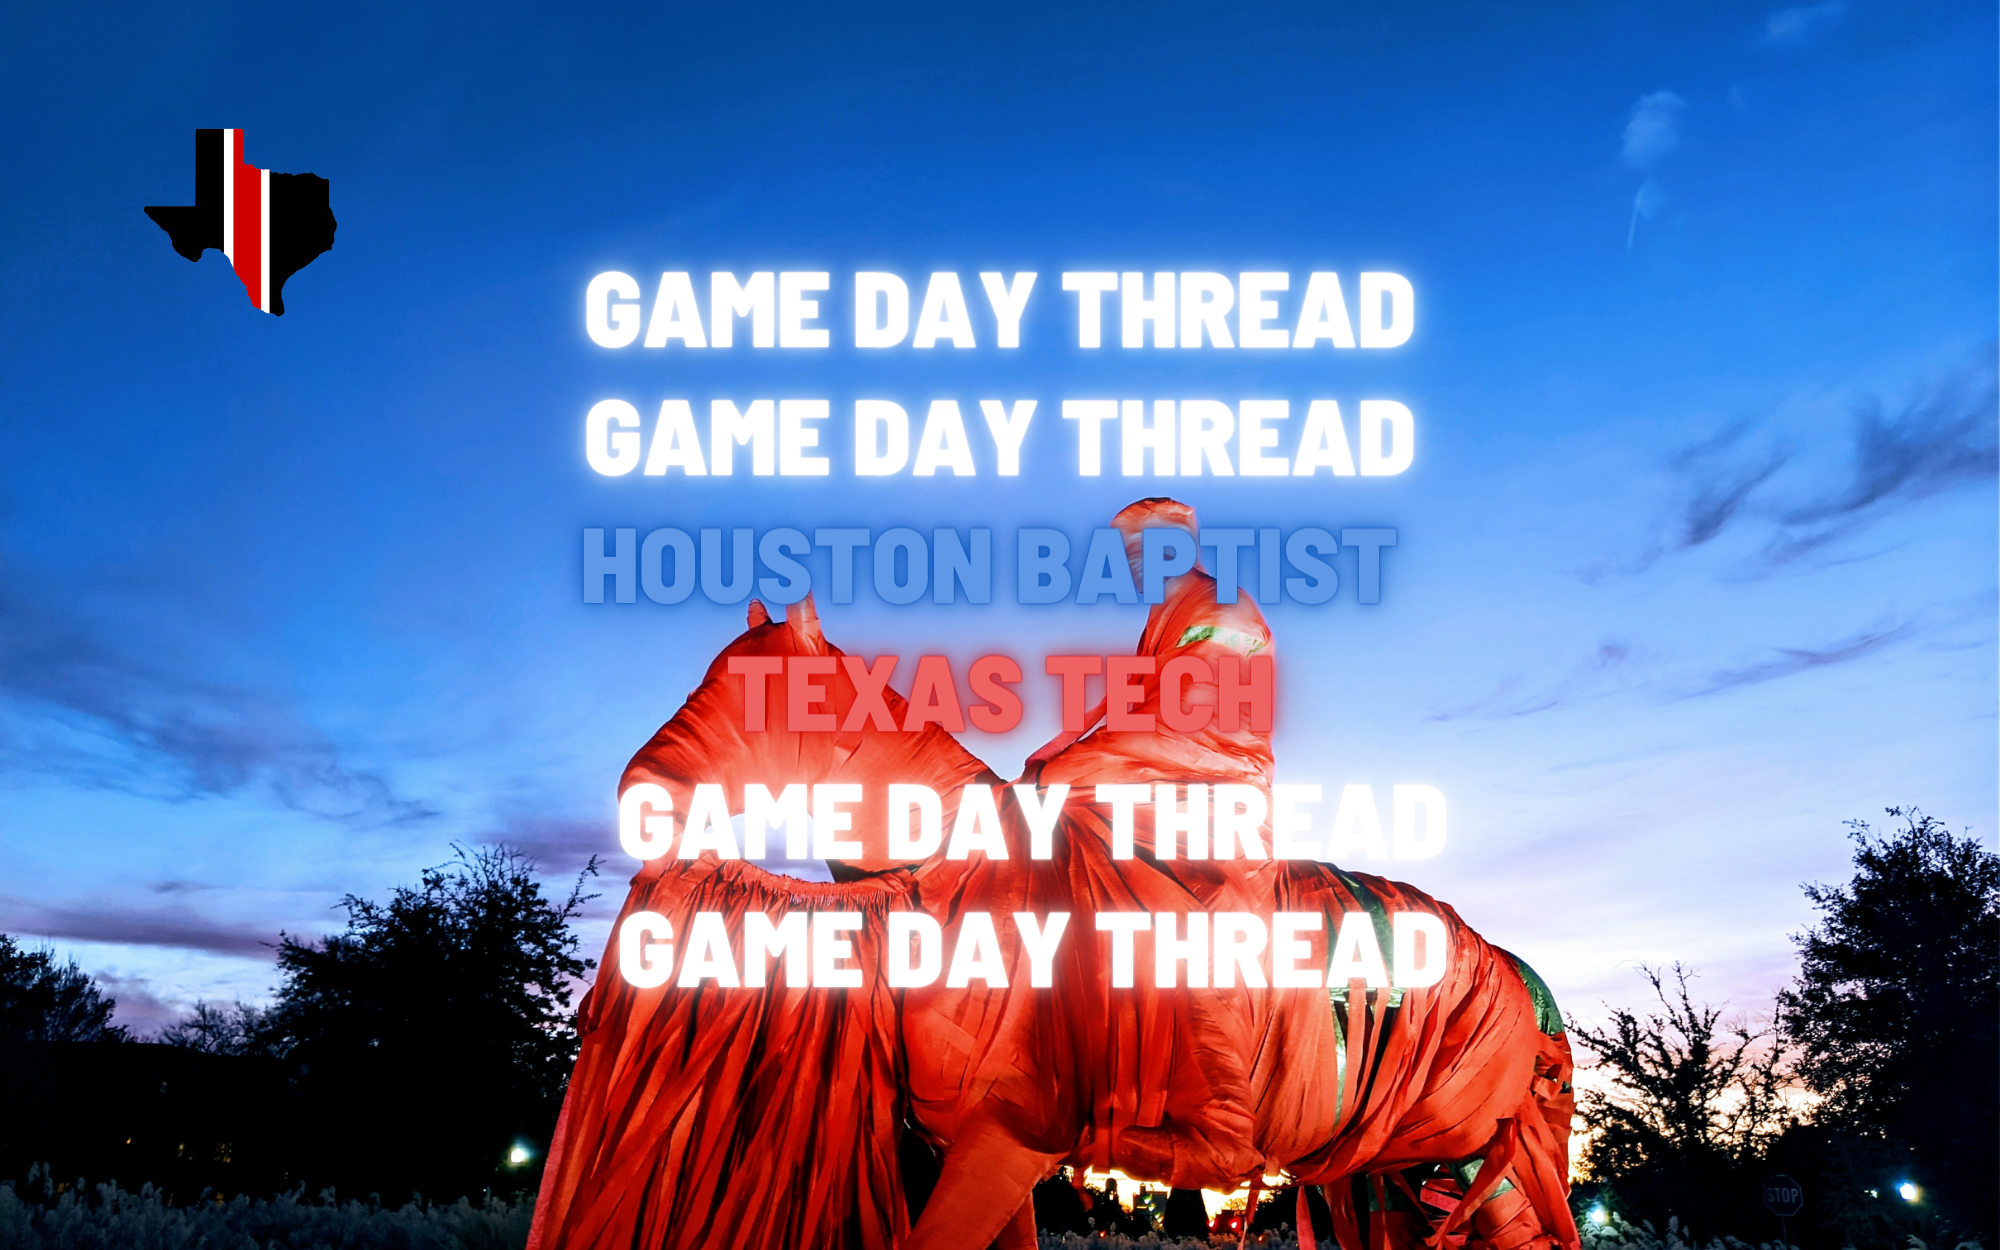 Game Day Thread 4: Houston Baptist vs. Texas Tech